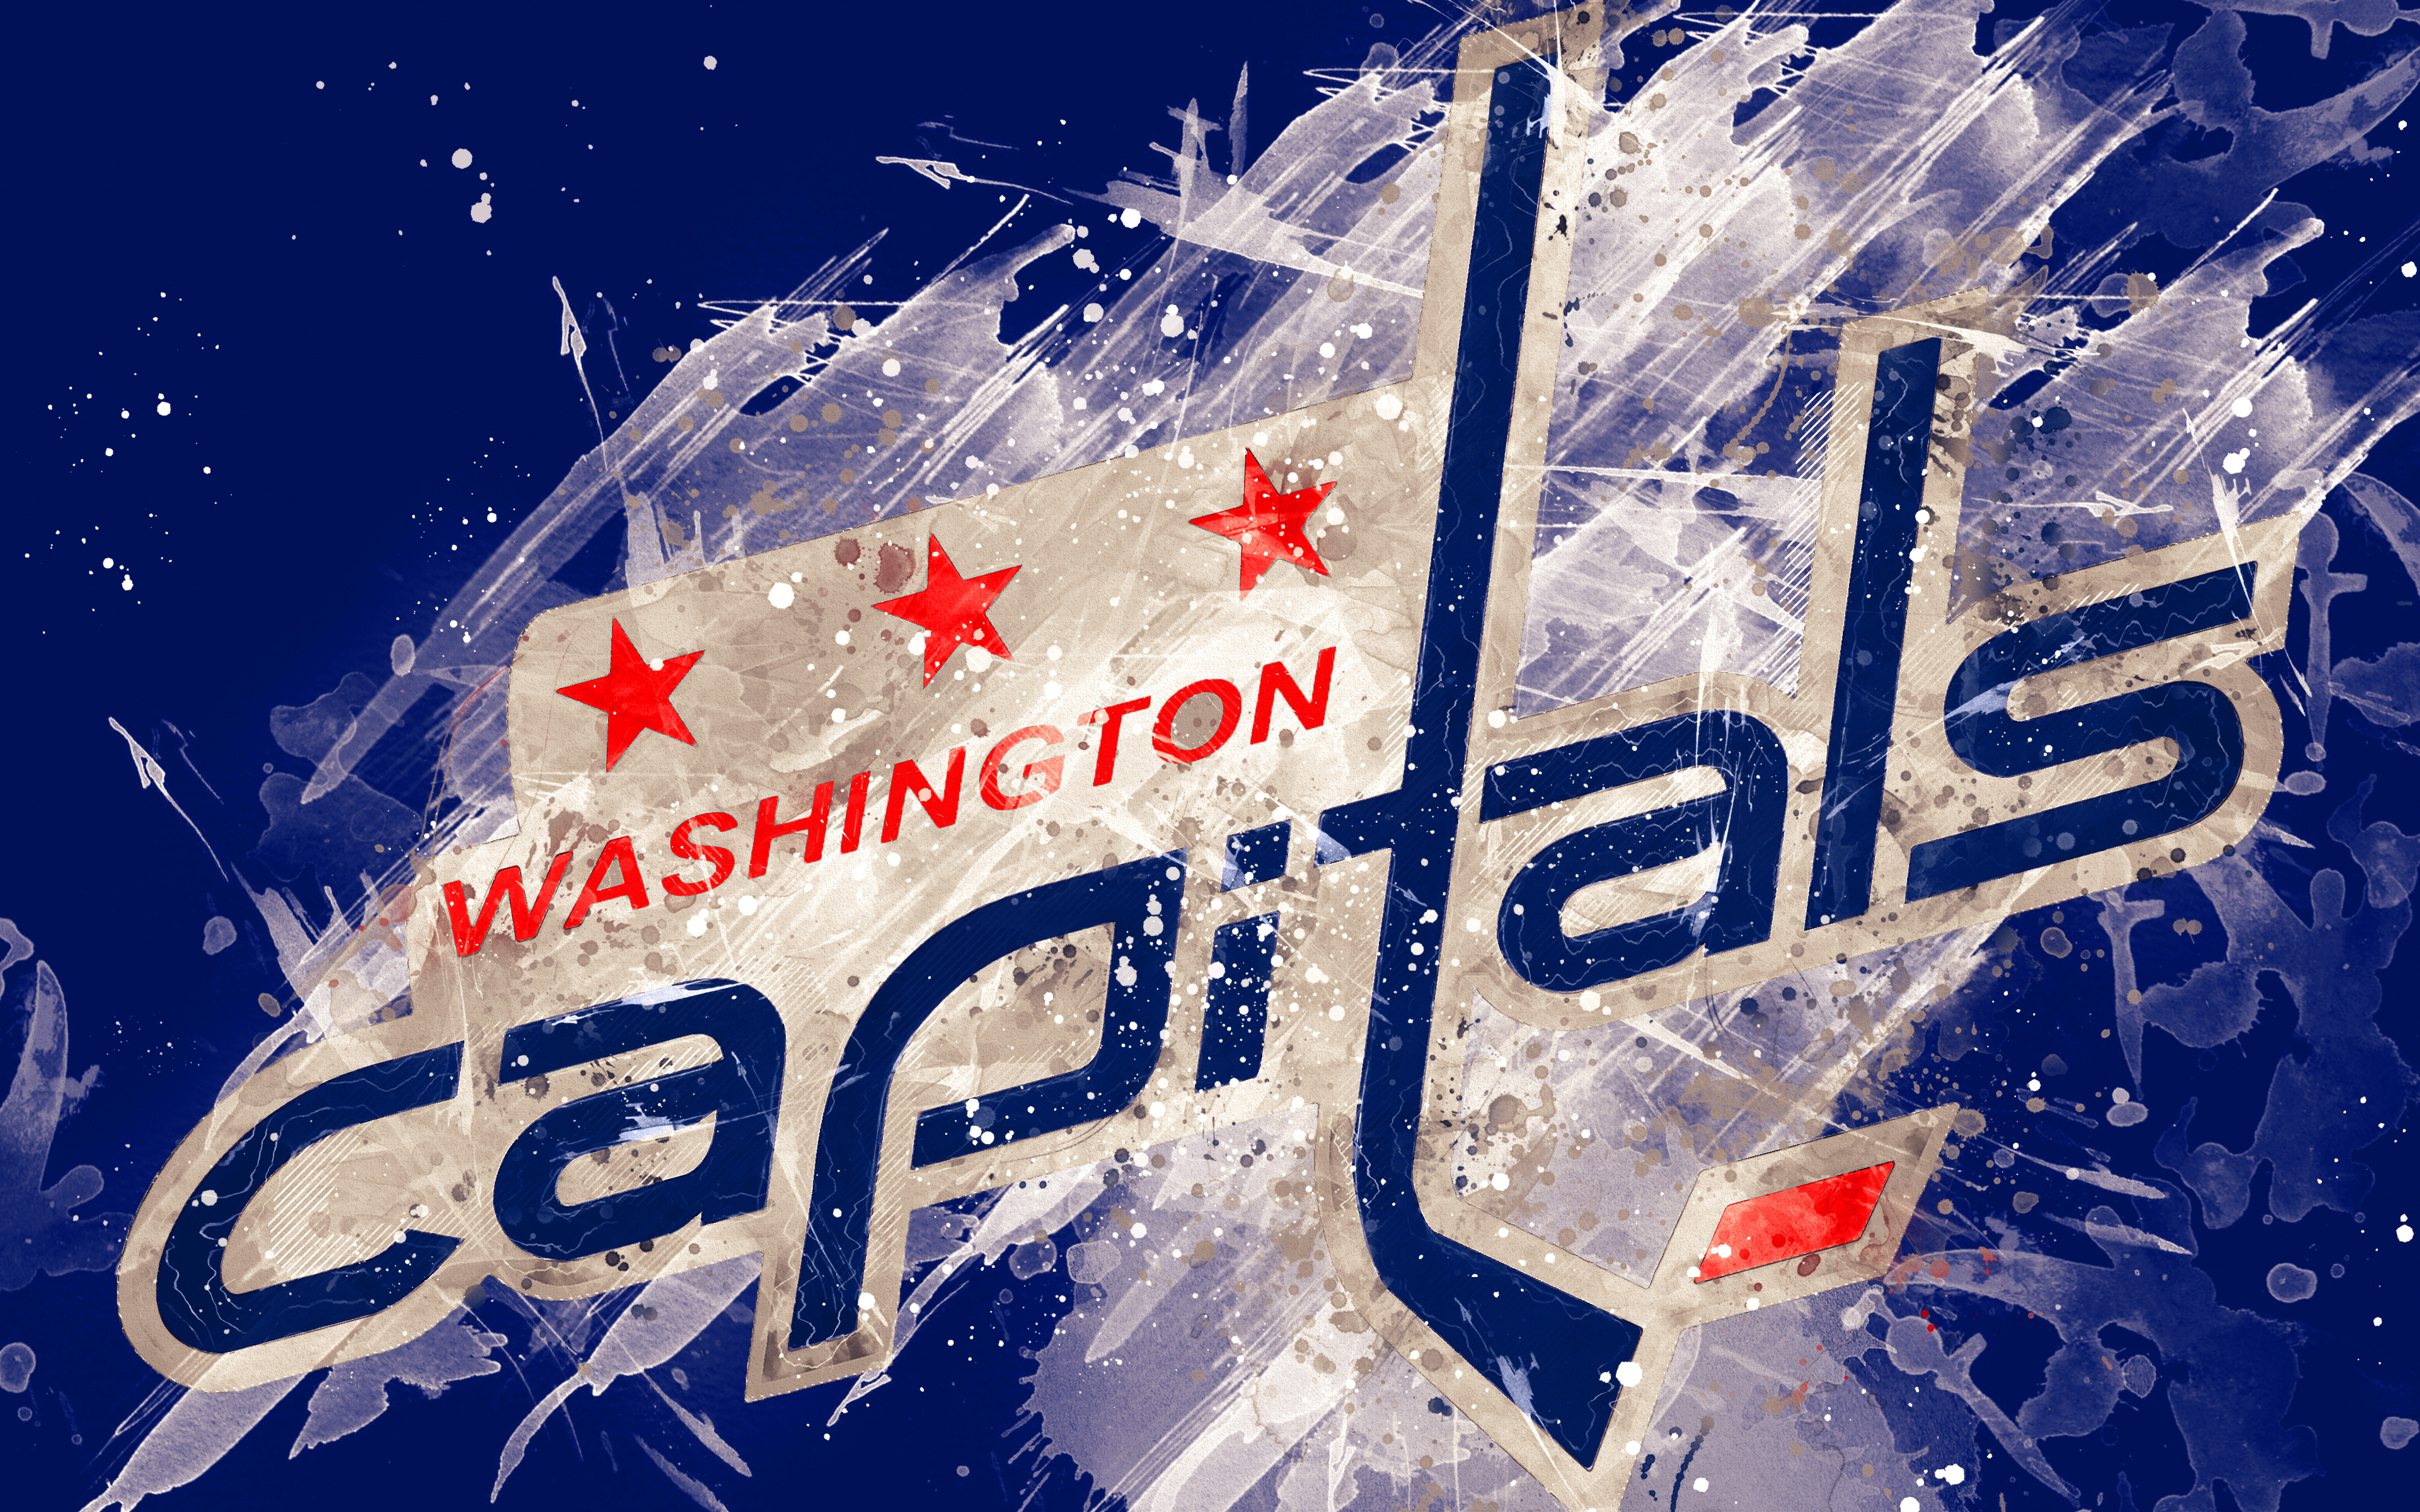 Sports Washington Capitals HD Wallpaper | Background Image